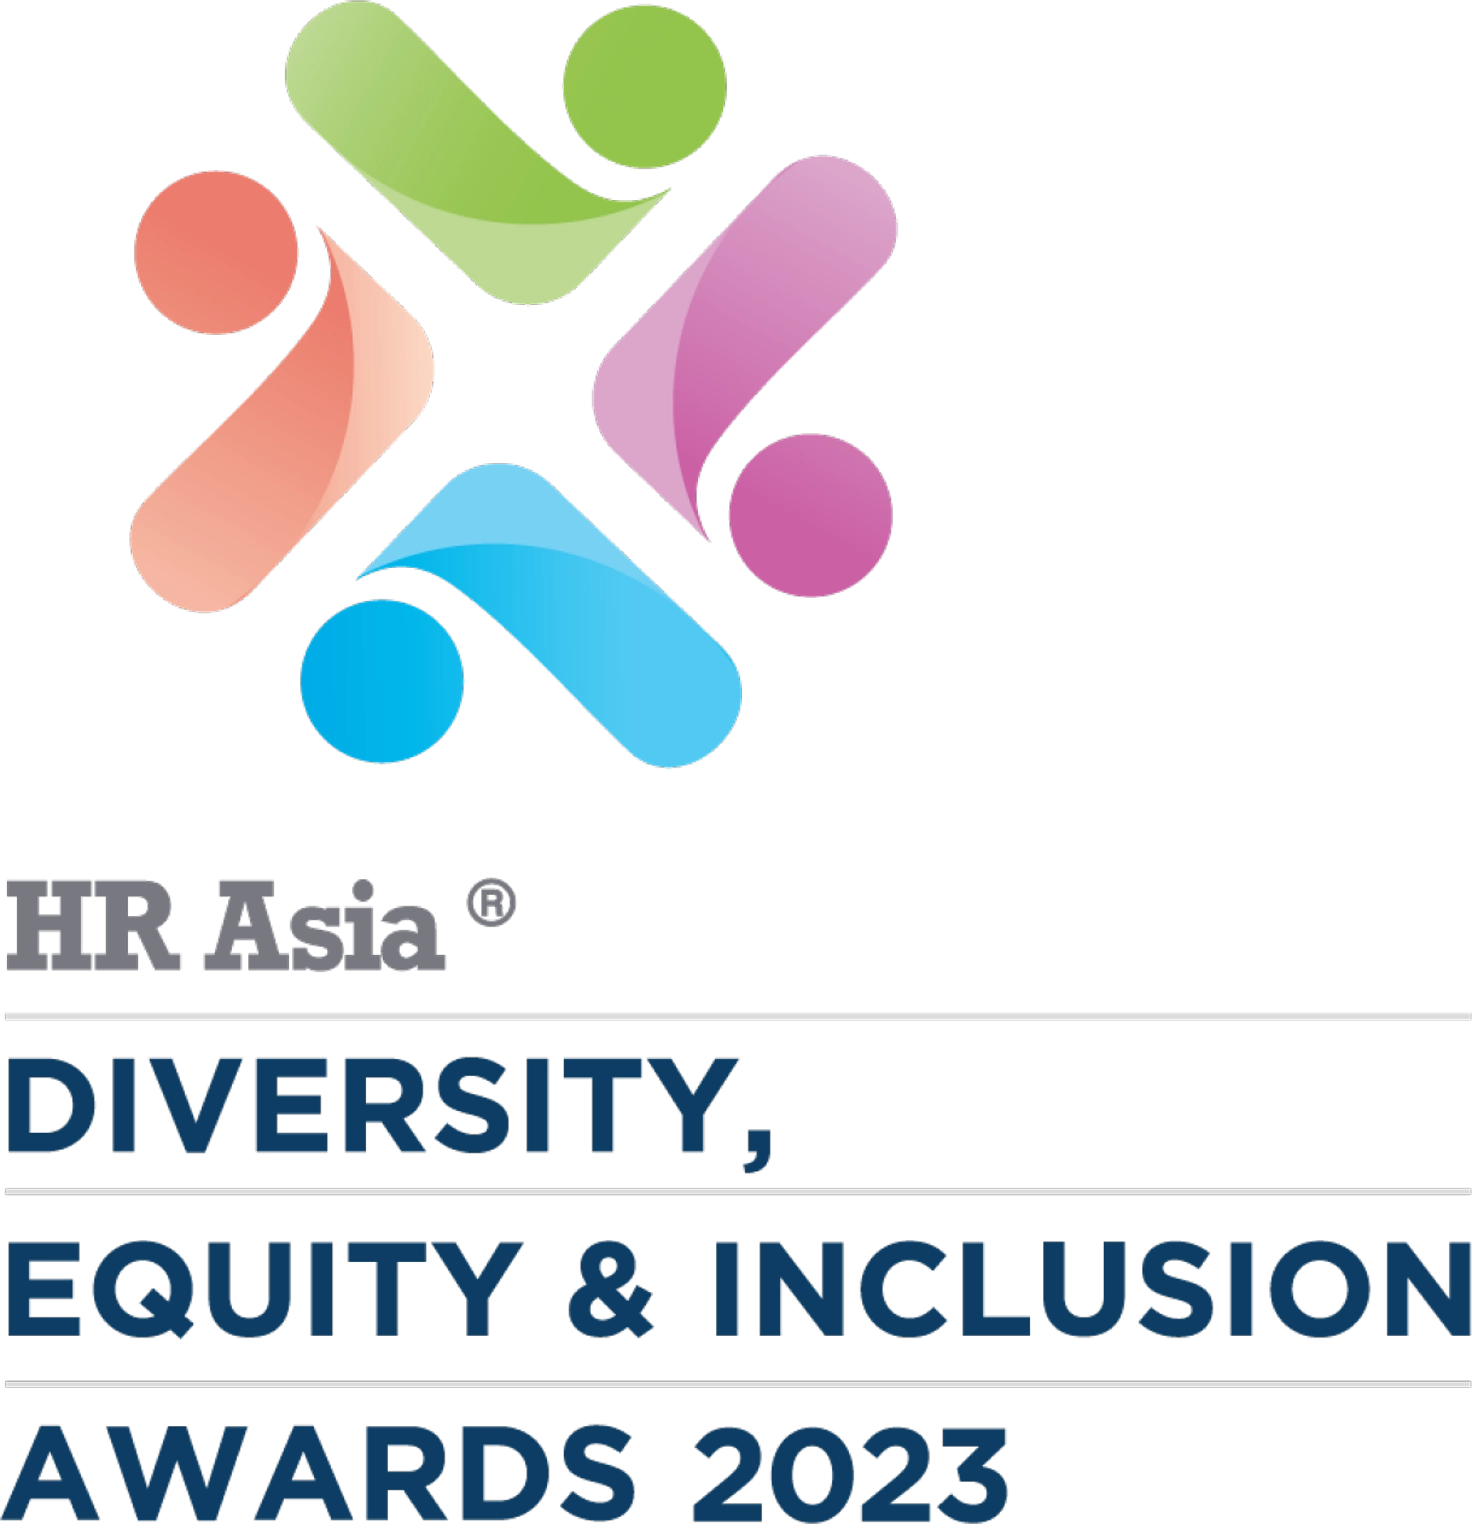 HR Asia Best- Diversity Initiatives thumb